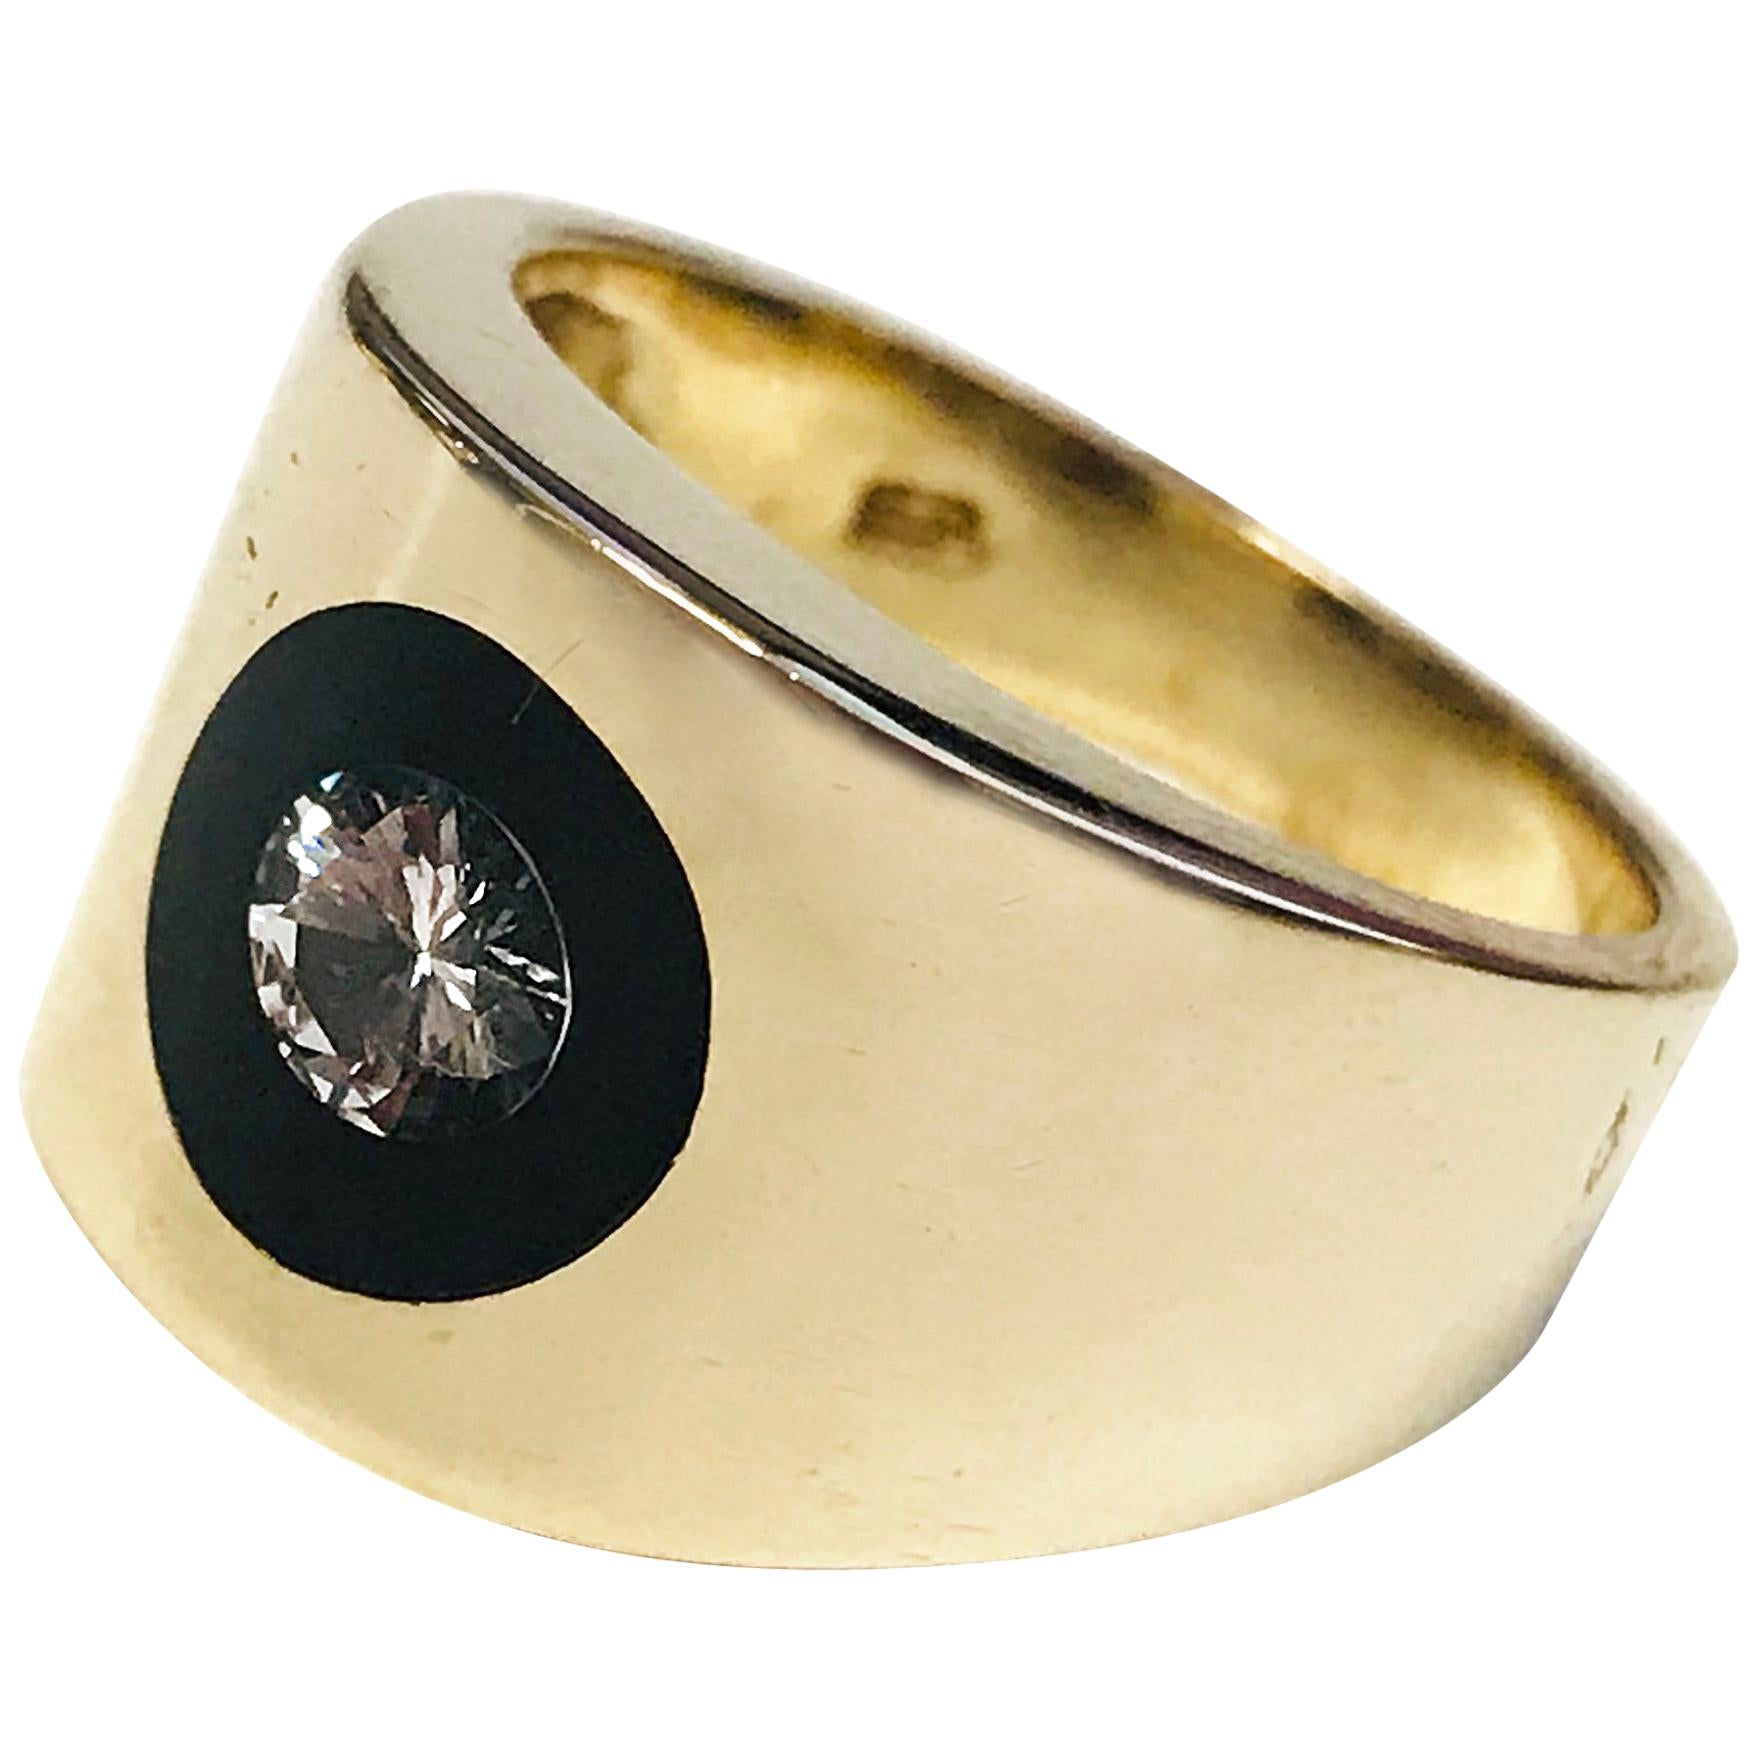 Incogem Floating Diamond Lucite Ring - 0.35ct - Size 6.75 For Sale